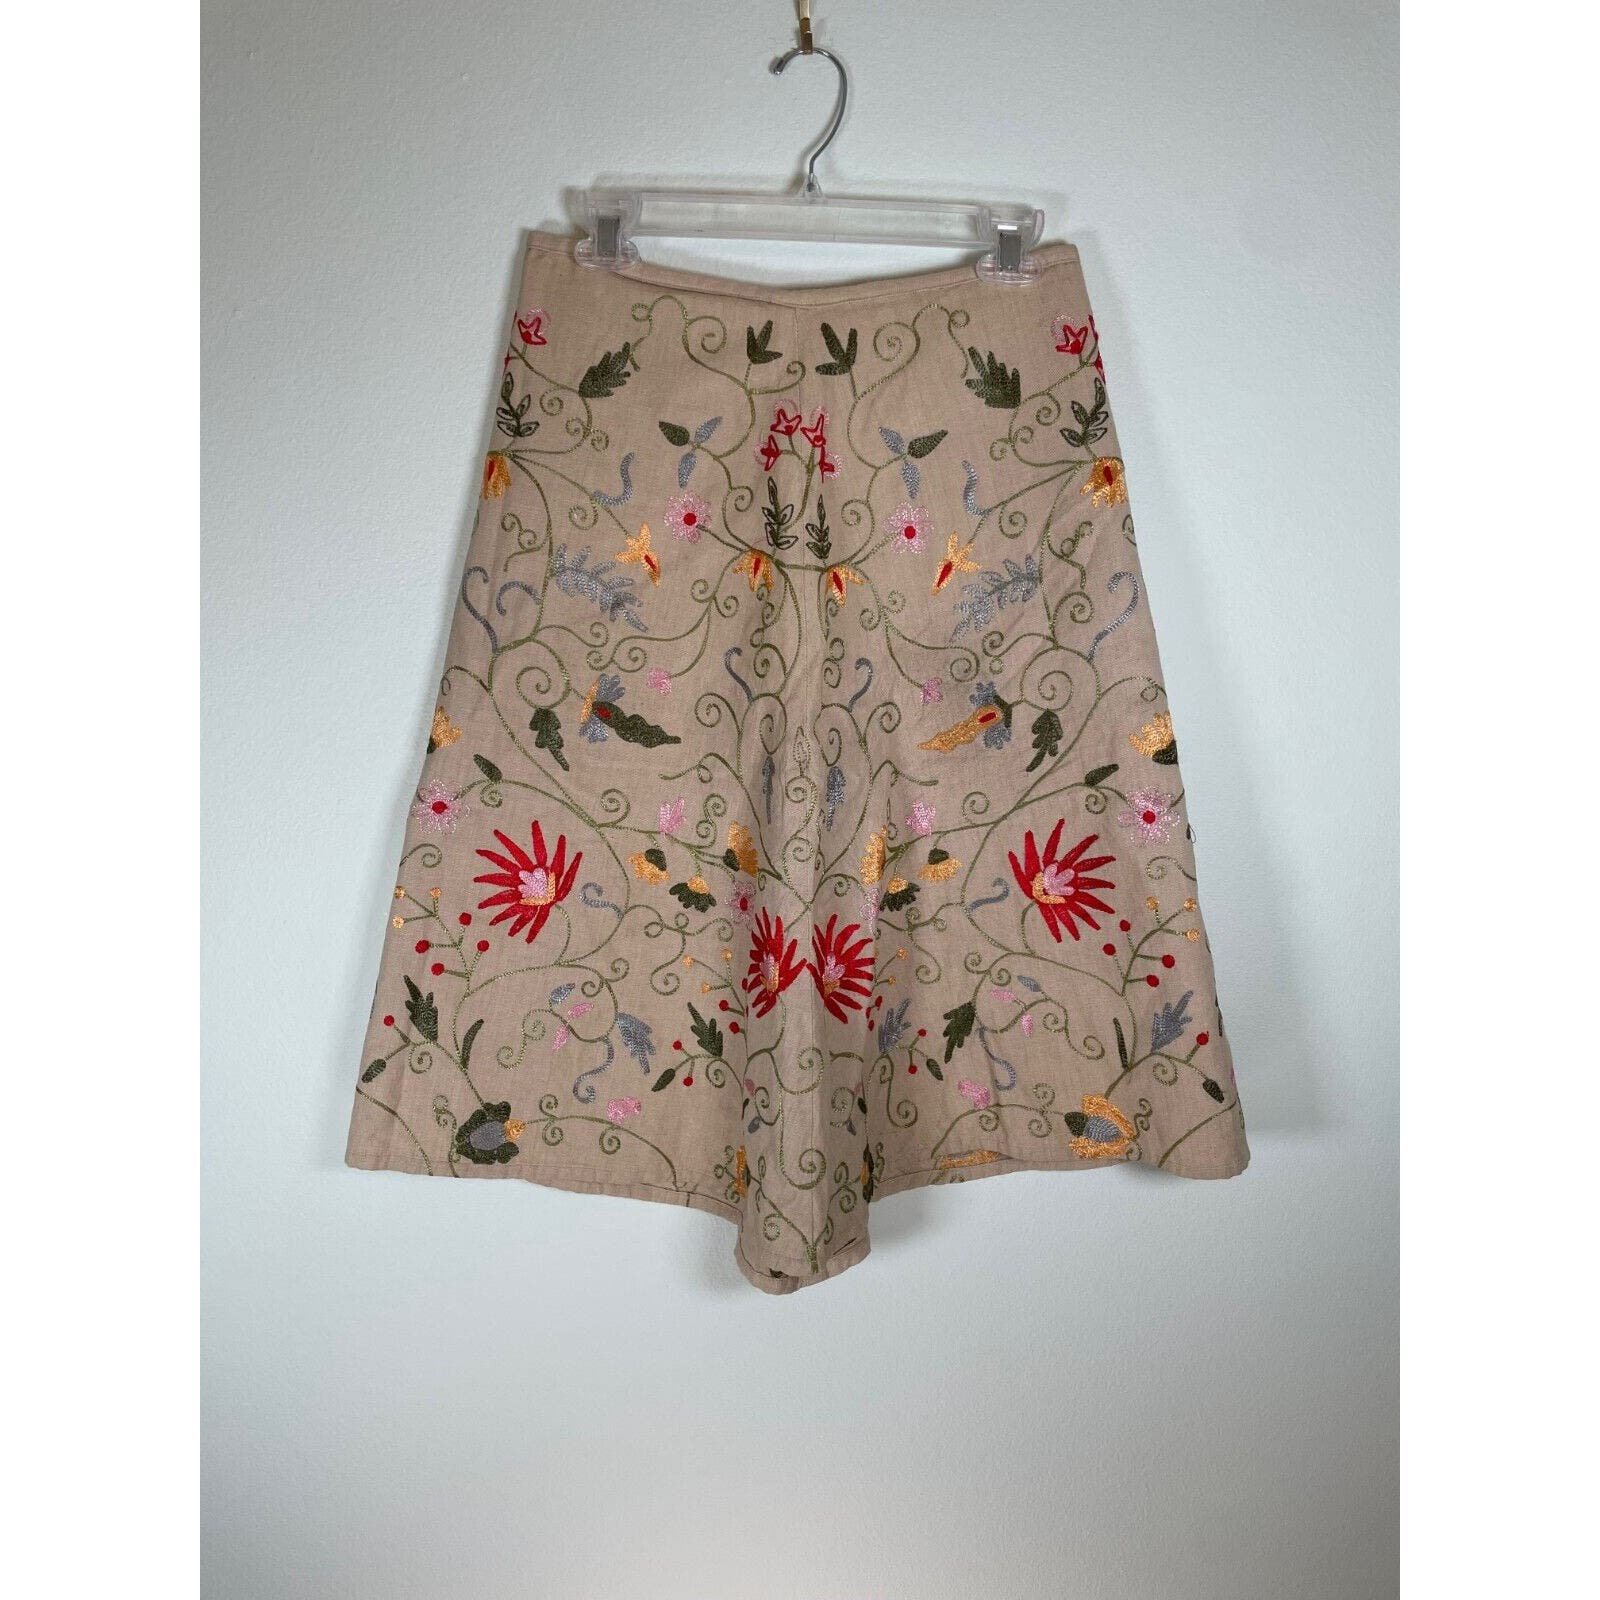 Fashion Vintage Womens Skirt Size 10 Tan Floral Embroidered Linen Cottagecore Boho 70s P9r5ztqA9 Online Exclusive